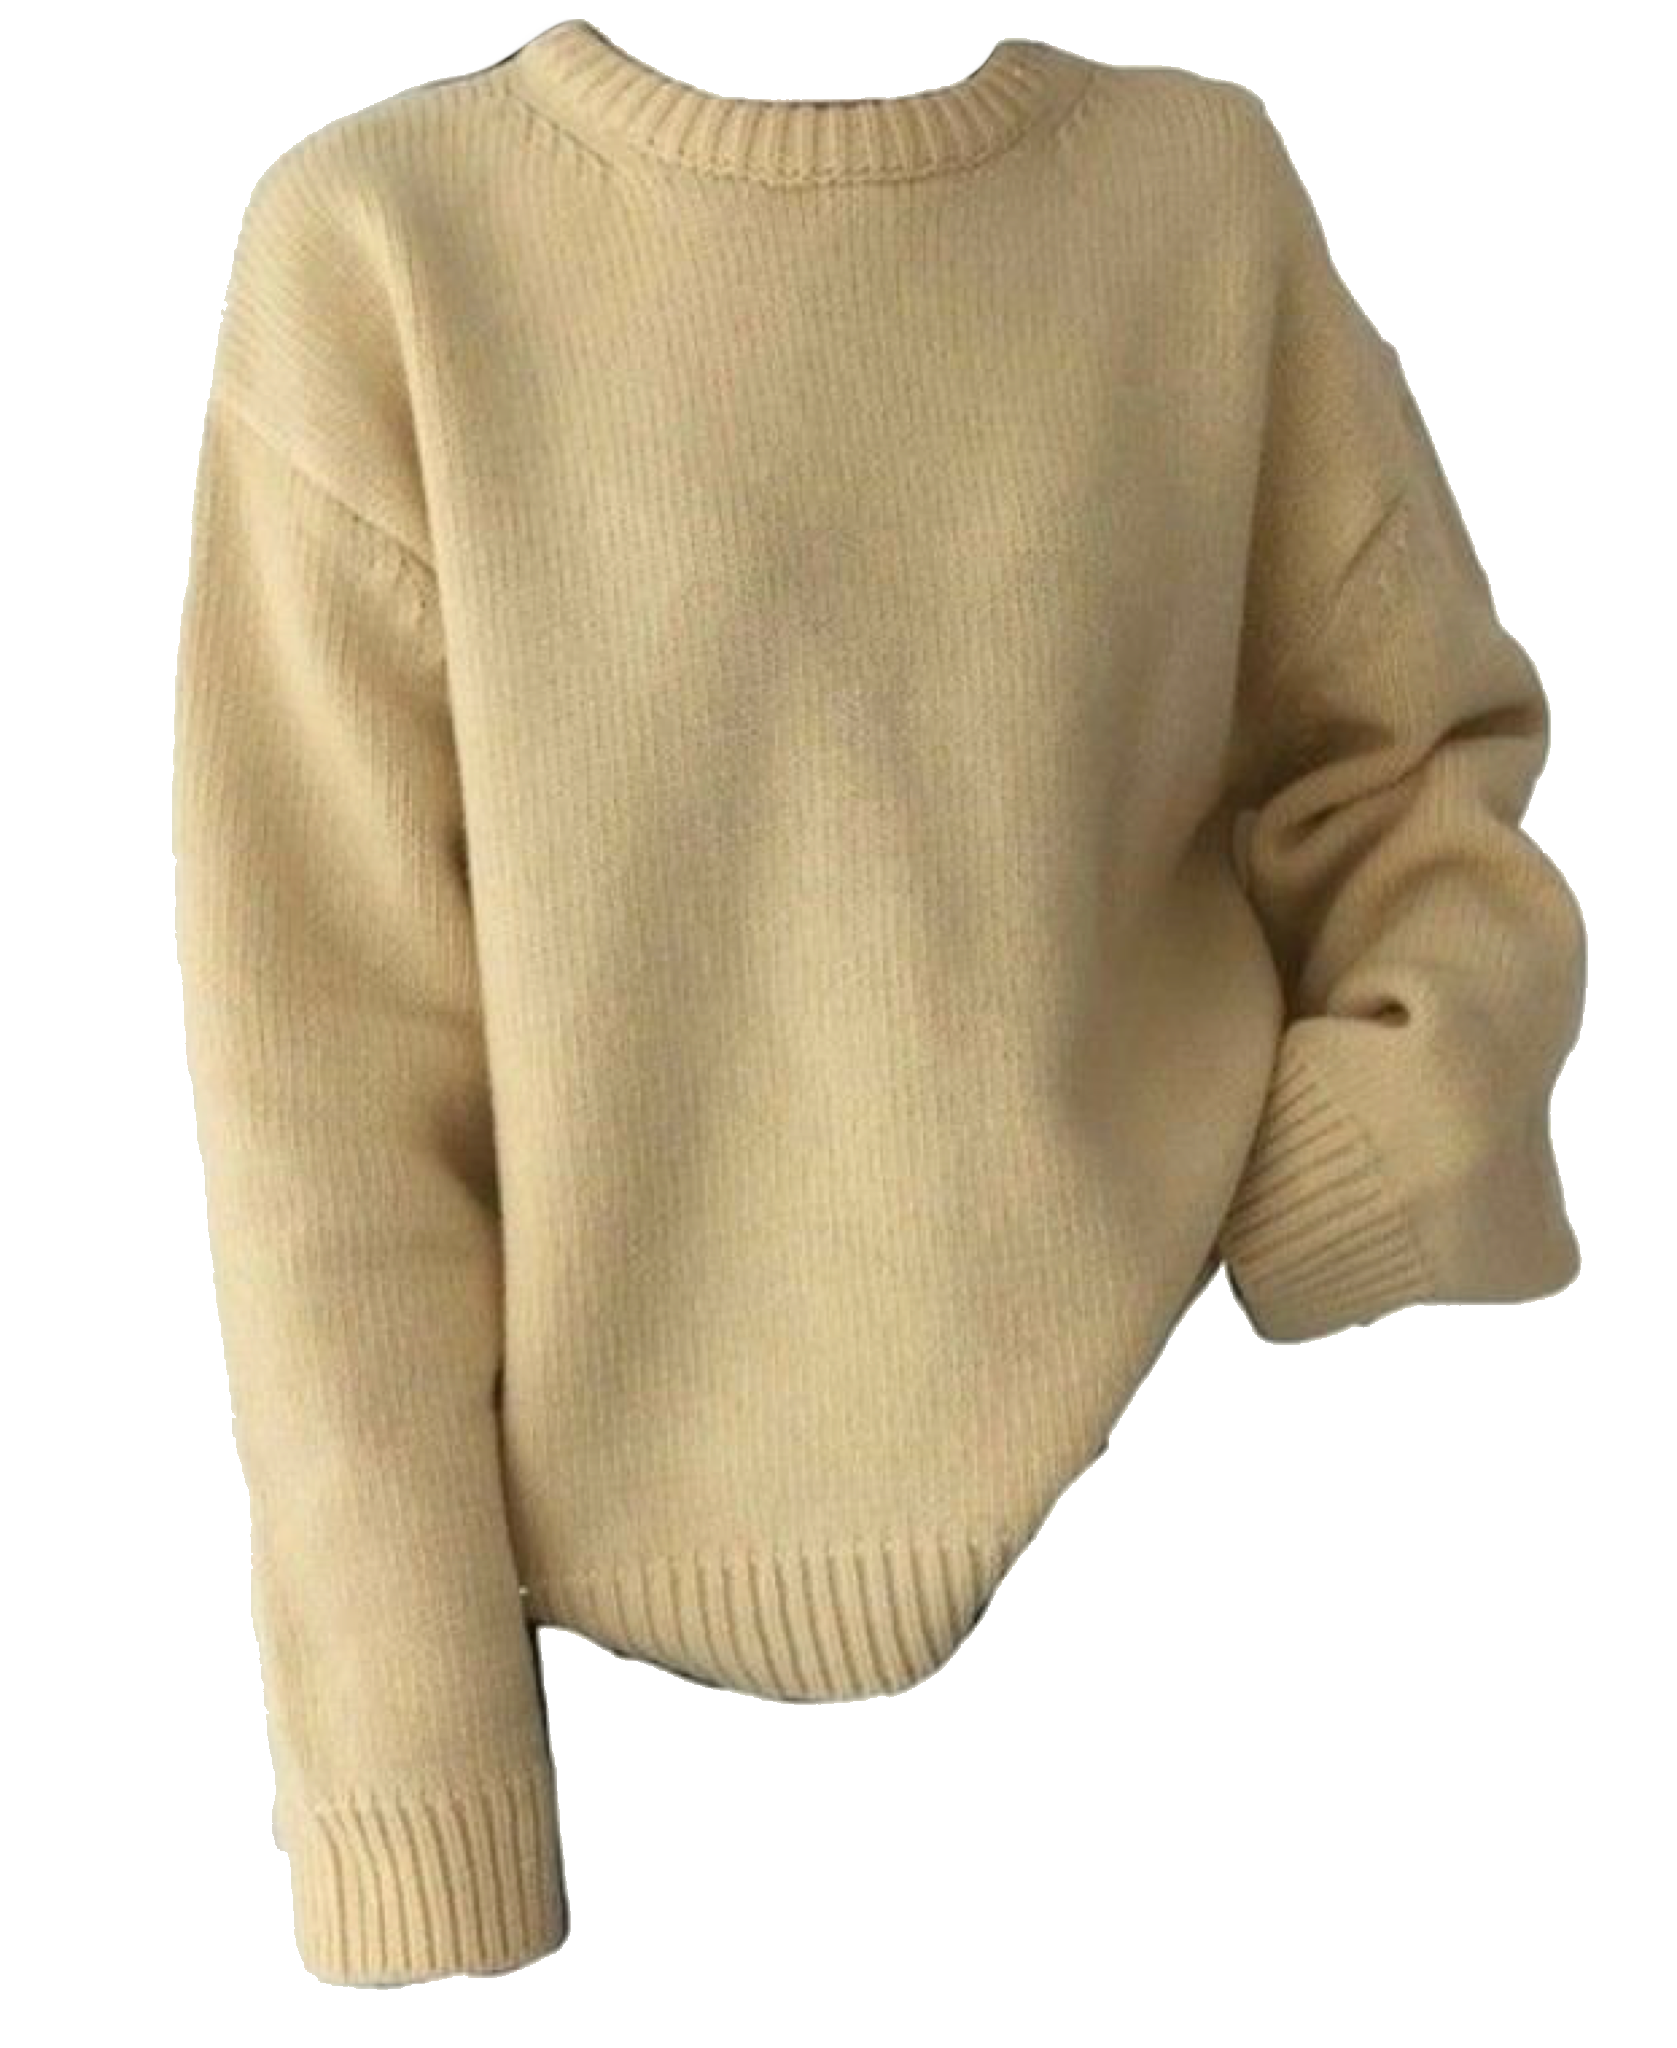 Sweater Transparent